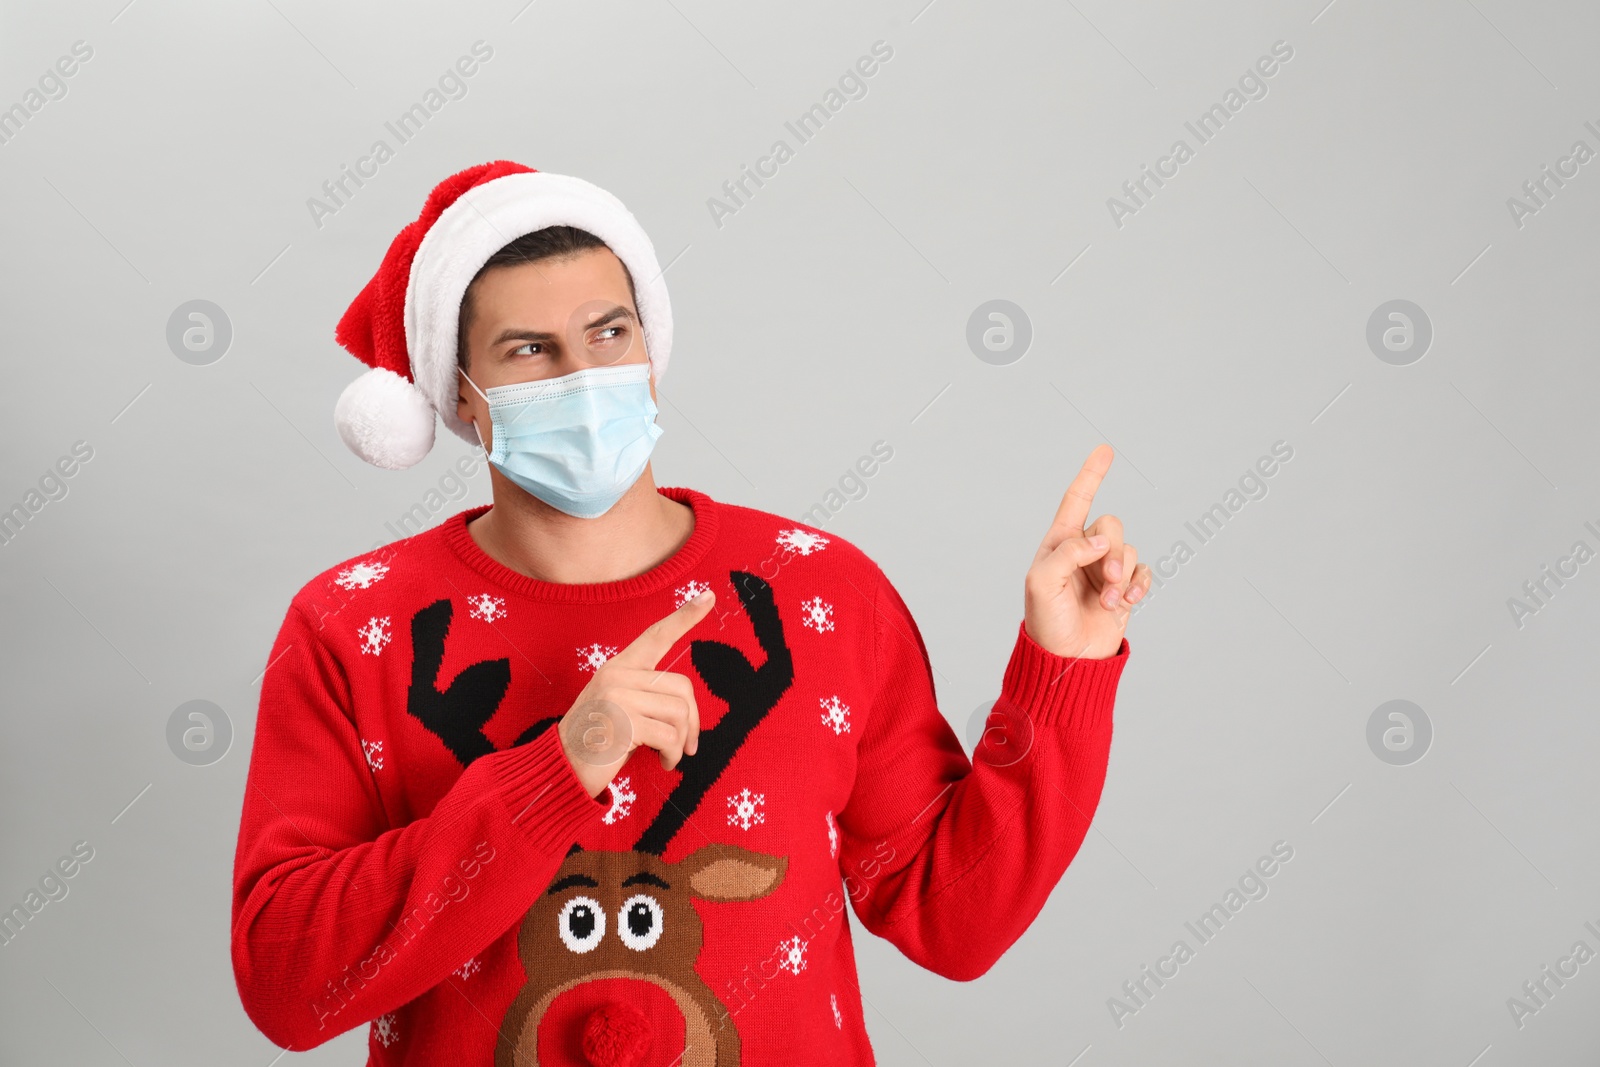 Photo of Man wearing Santa hat and medical mask on grey background